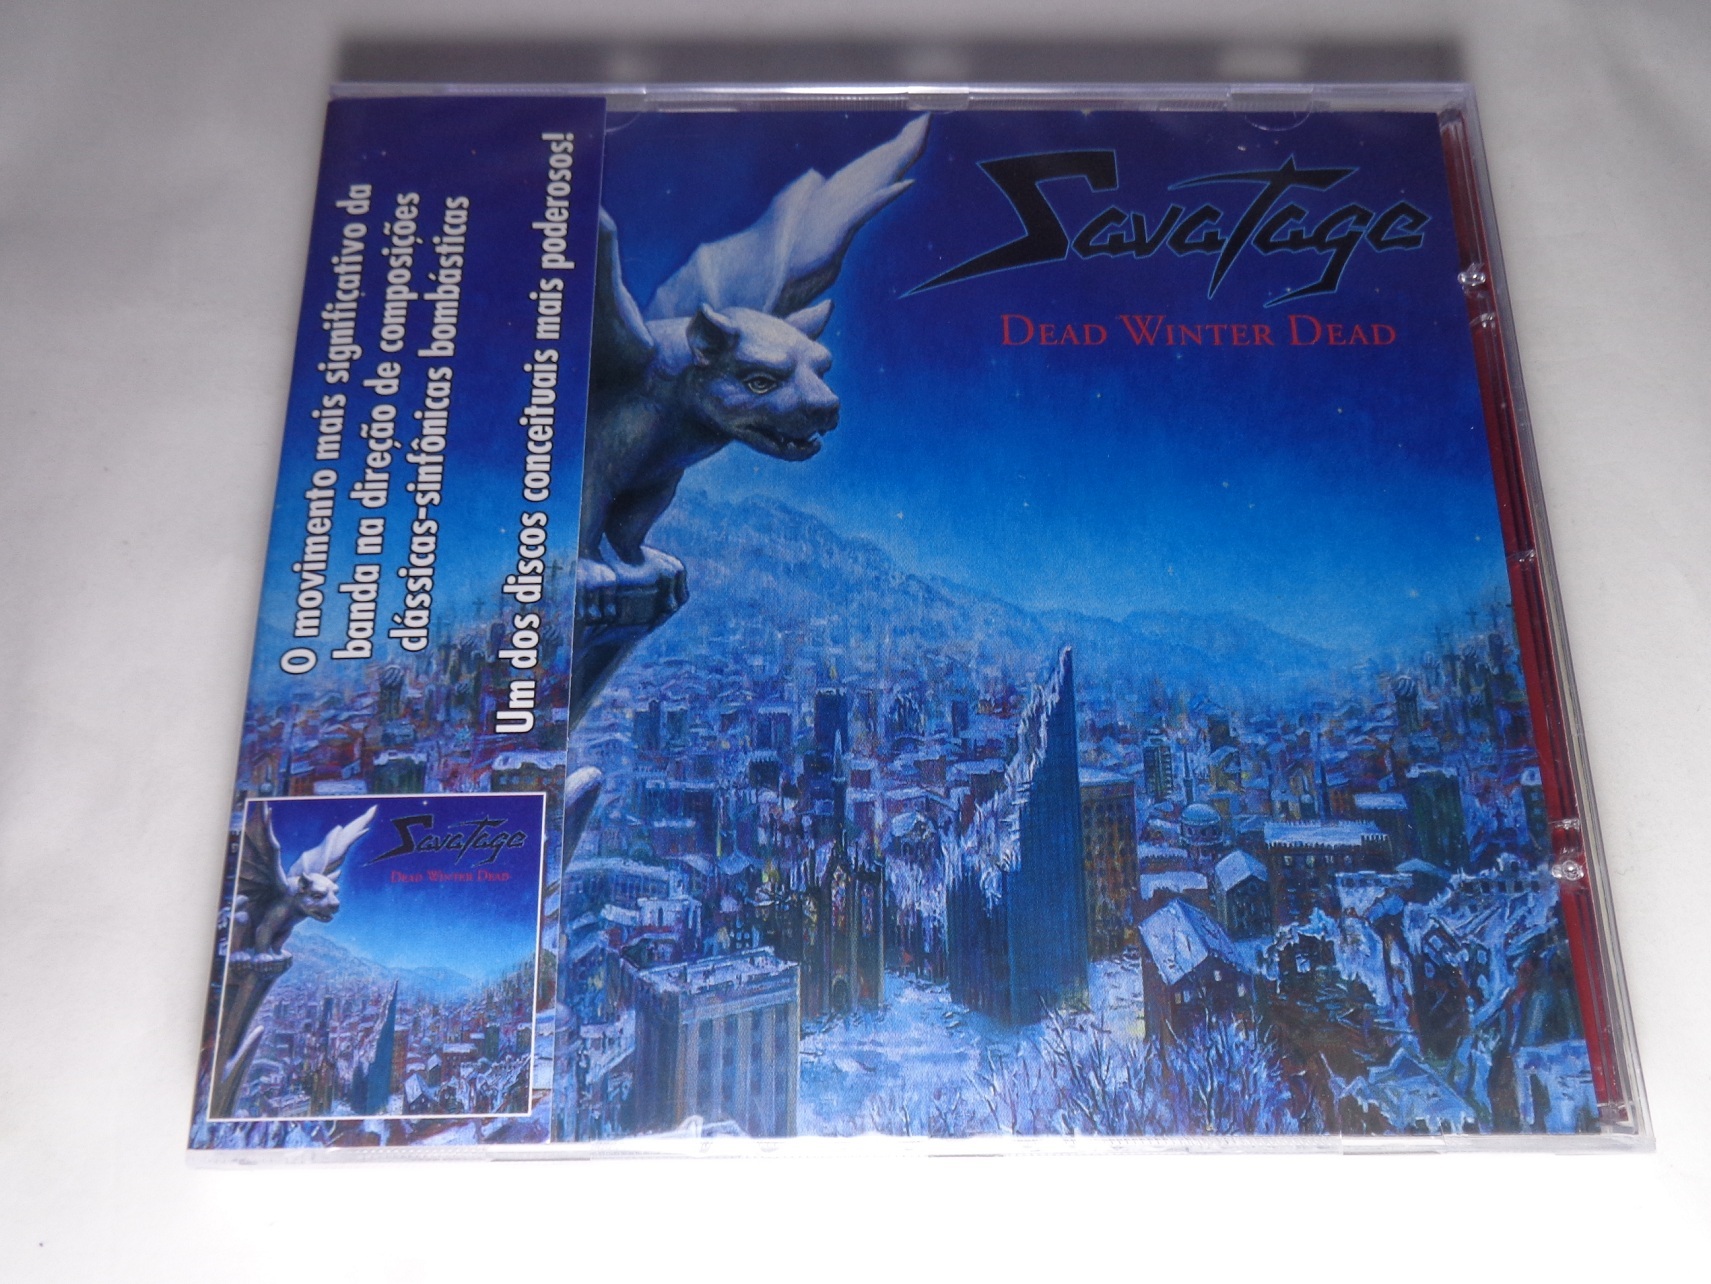 CD - Savatage - Dead Winter Dead